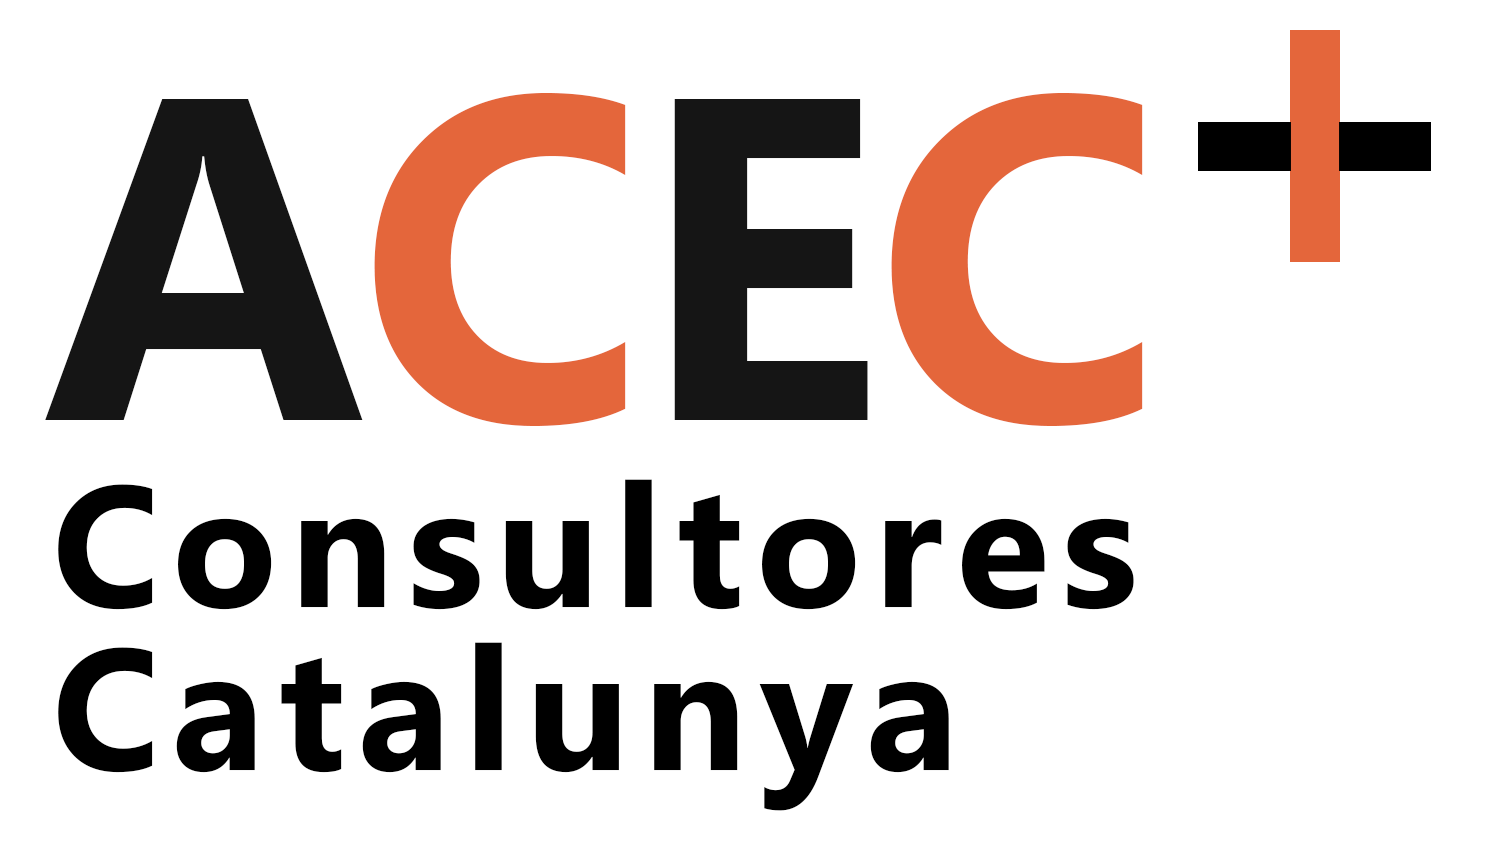 ACEC Consultores Catalunya